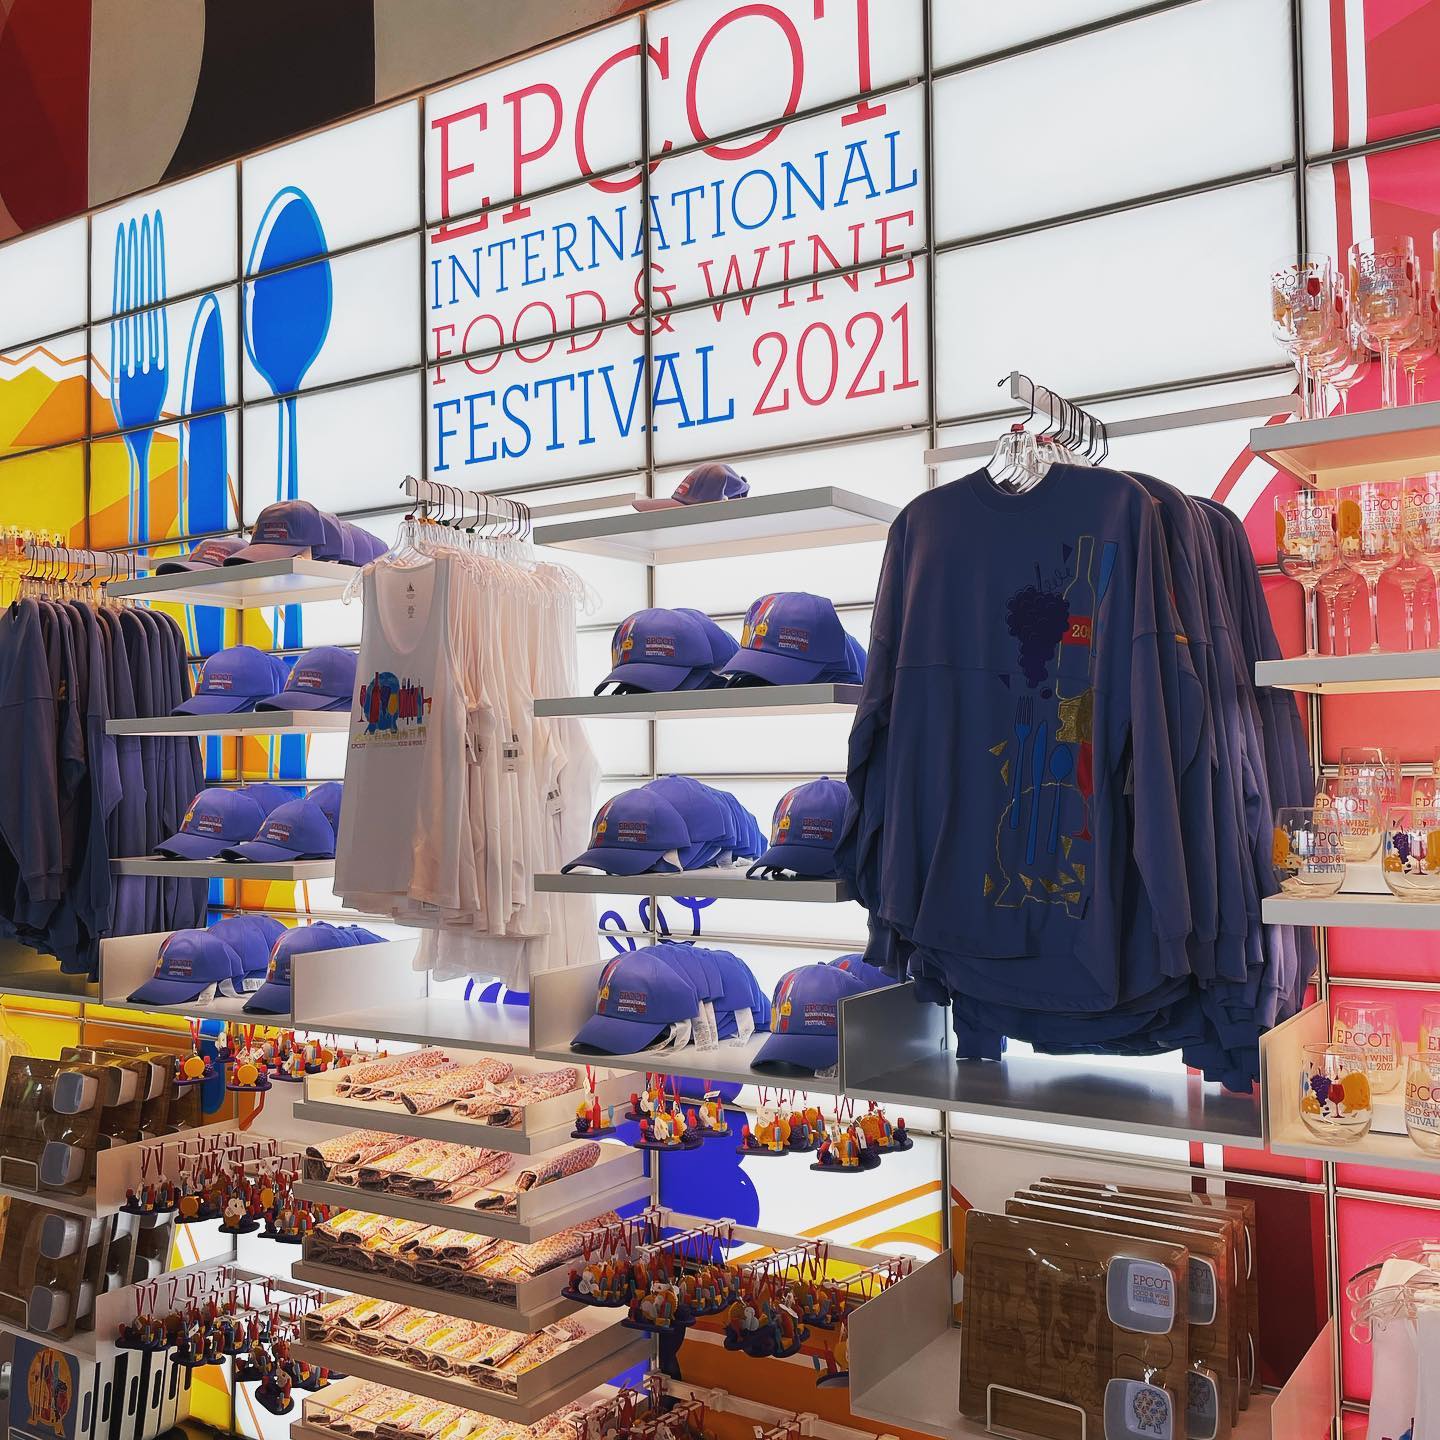 Produtos Disney - Creations Shop no Epcot